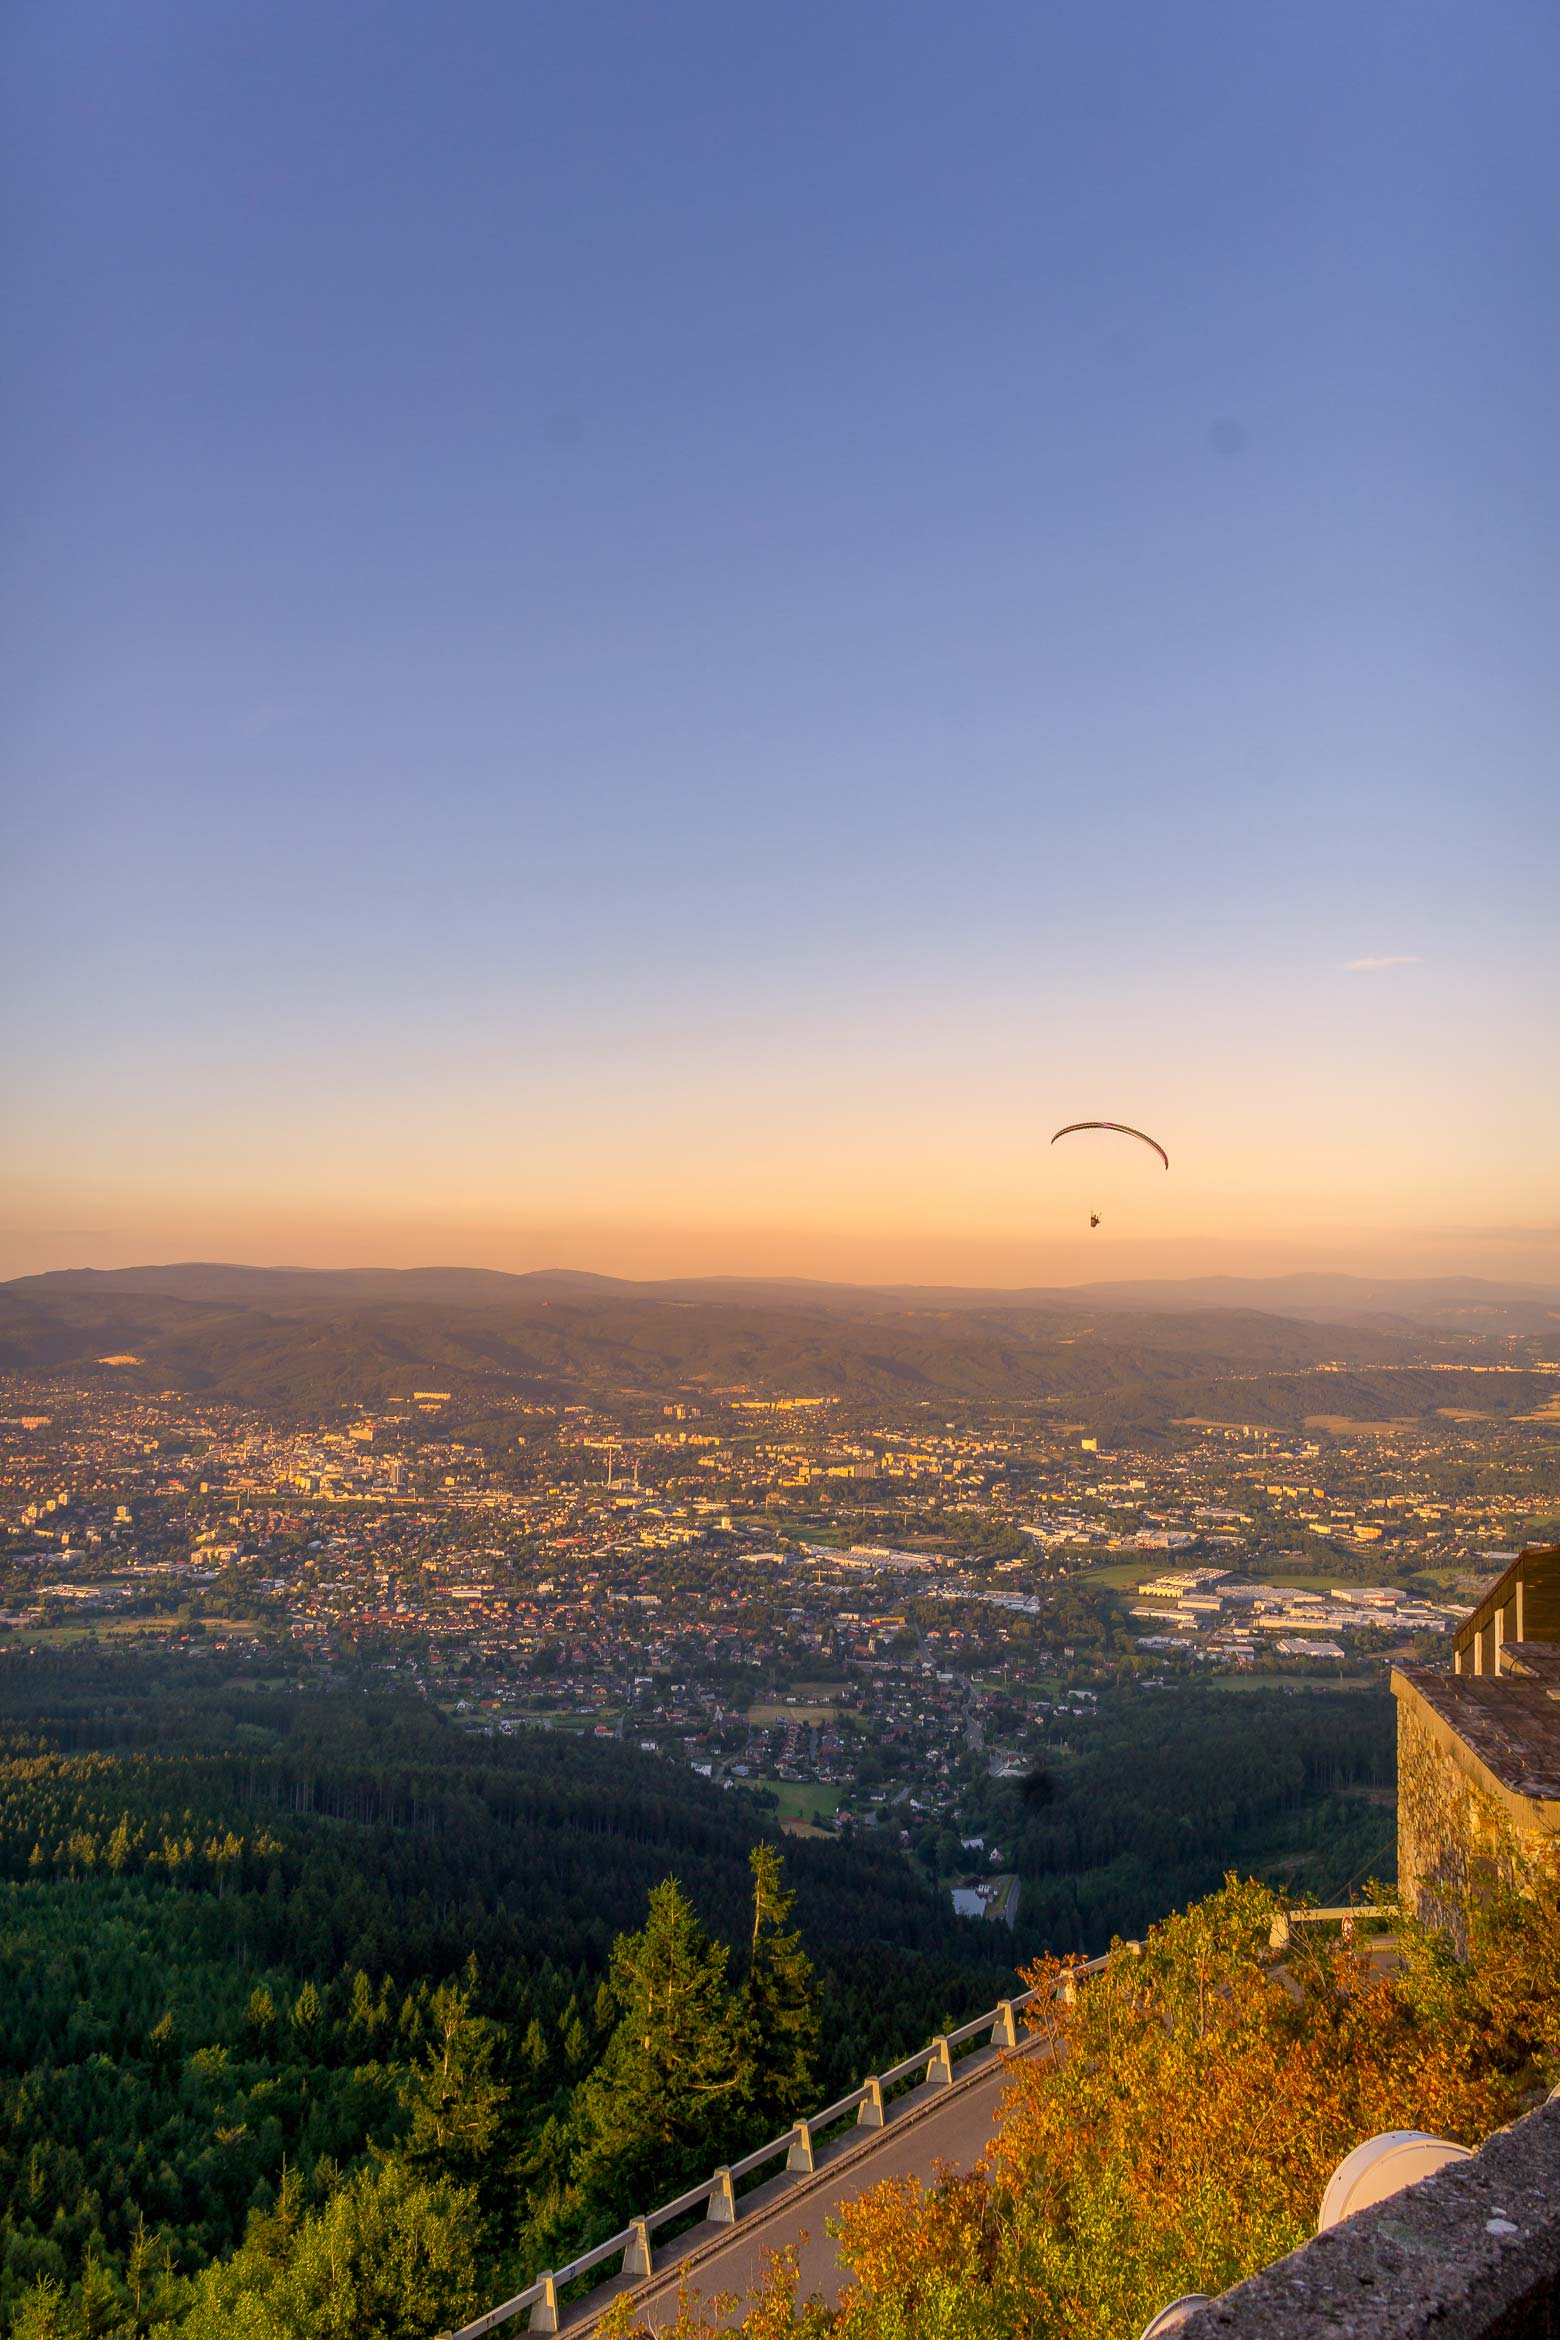 hang gliding in the Czech Republic